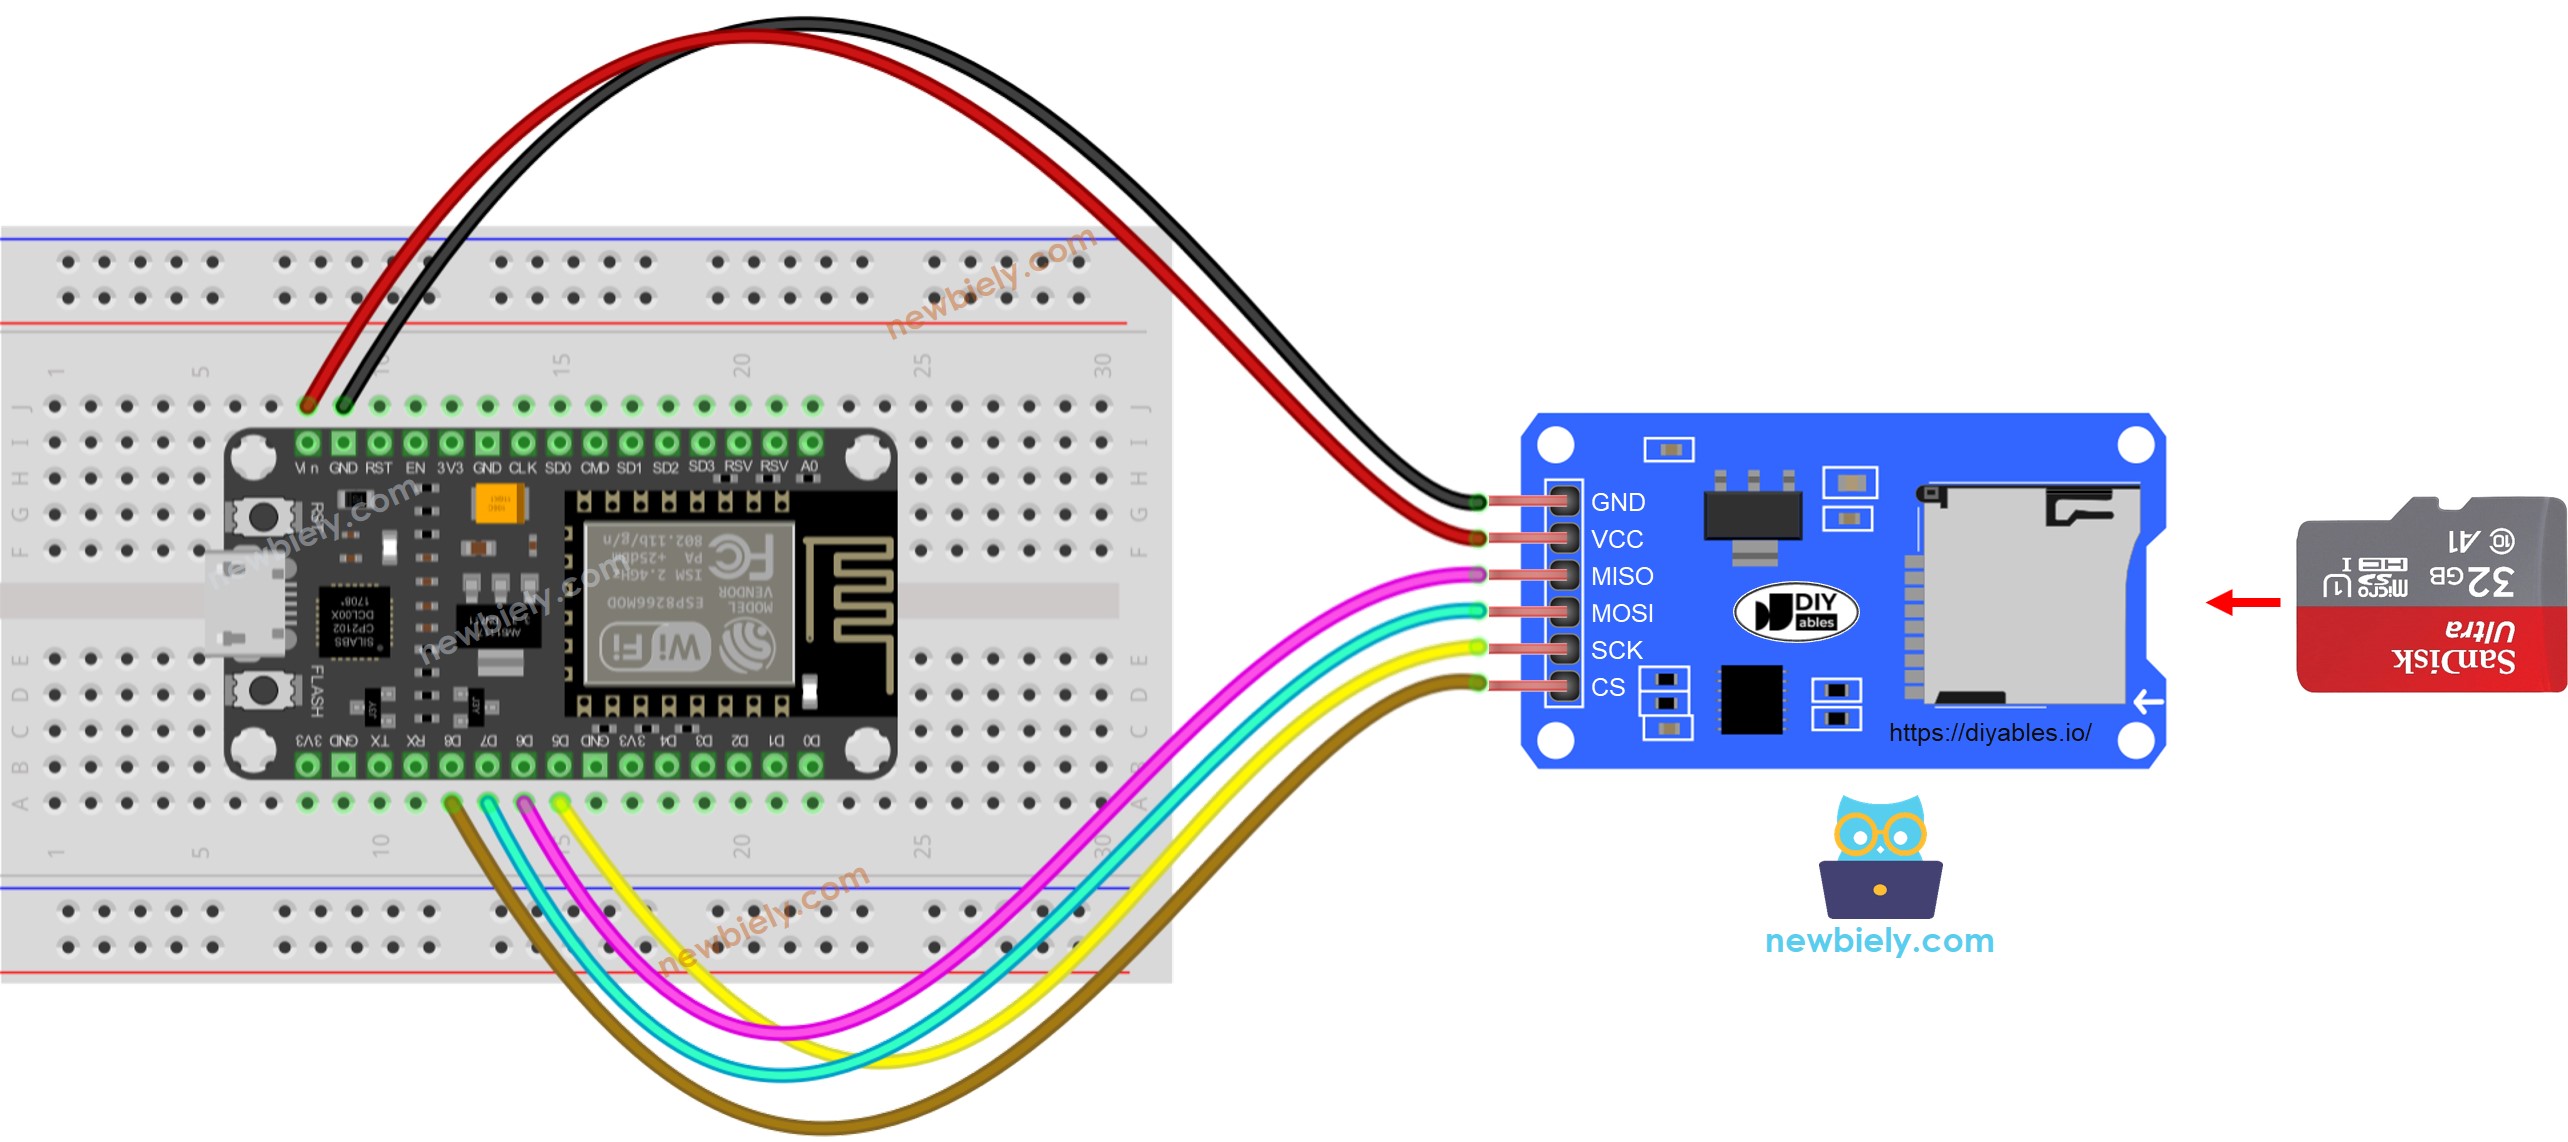 The wiring diagram between ESP8266 NodeMCU and Micro SD Card Module